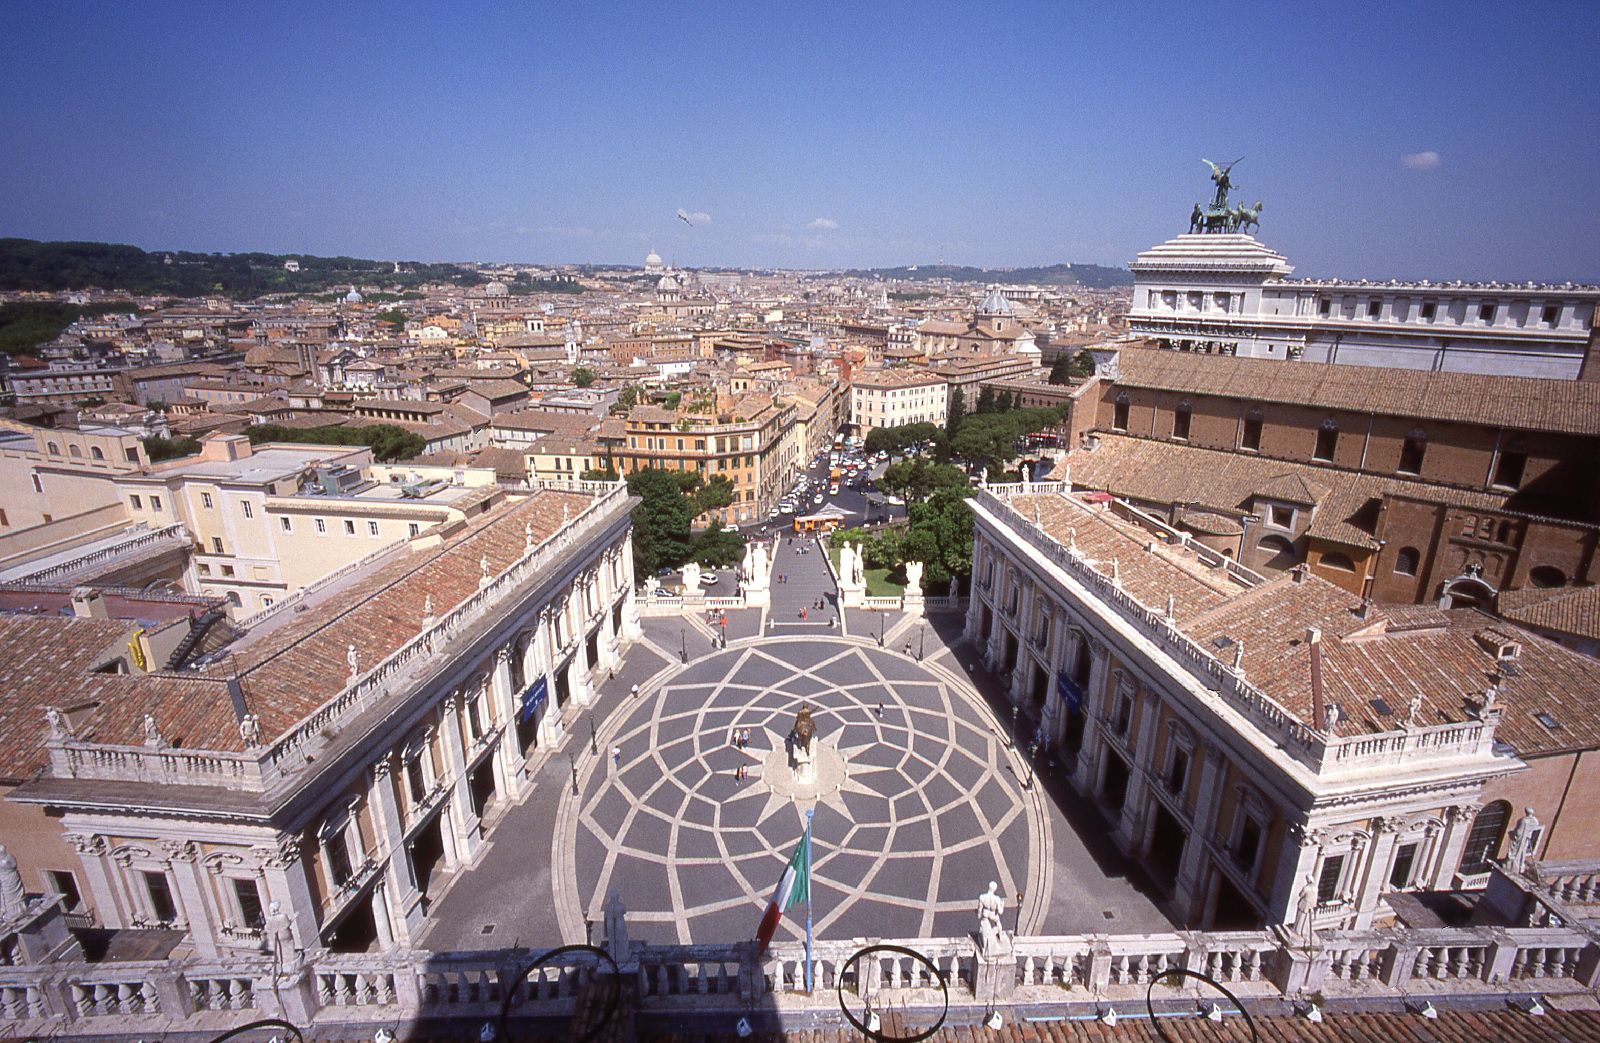 Gucci will present the Cruise 2020 collection in Rome – Inside the Musei Capitolini